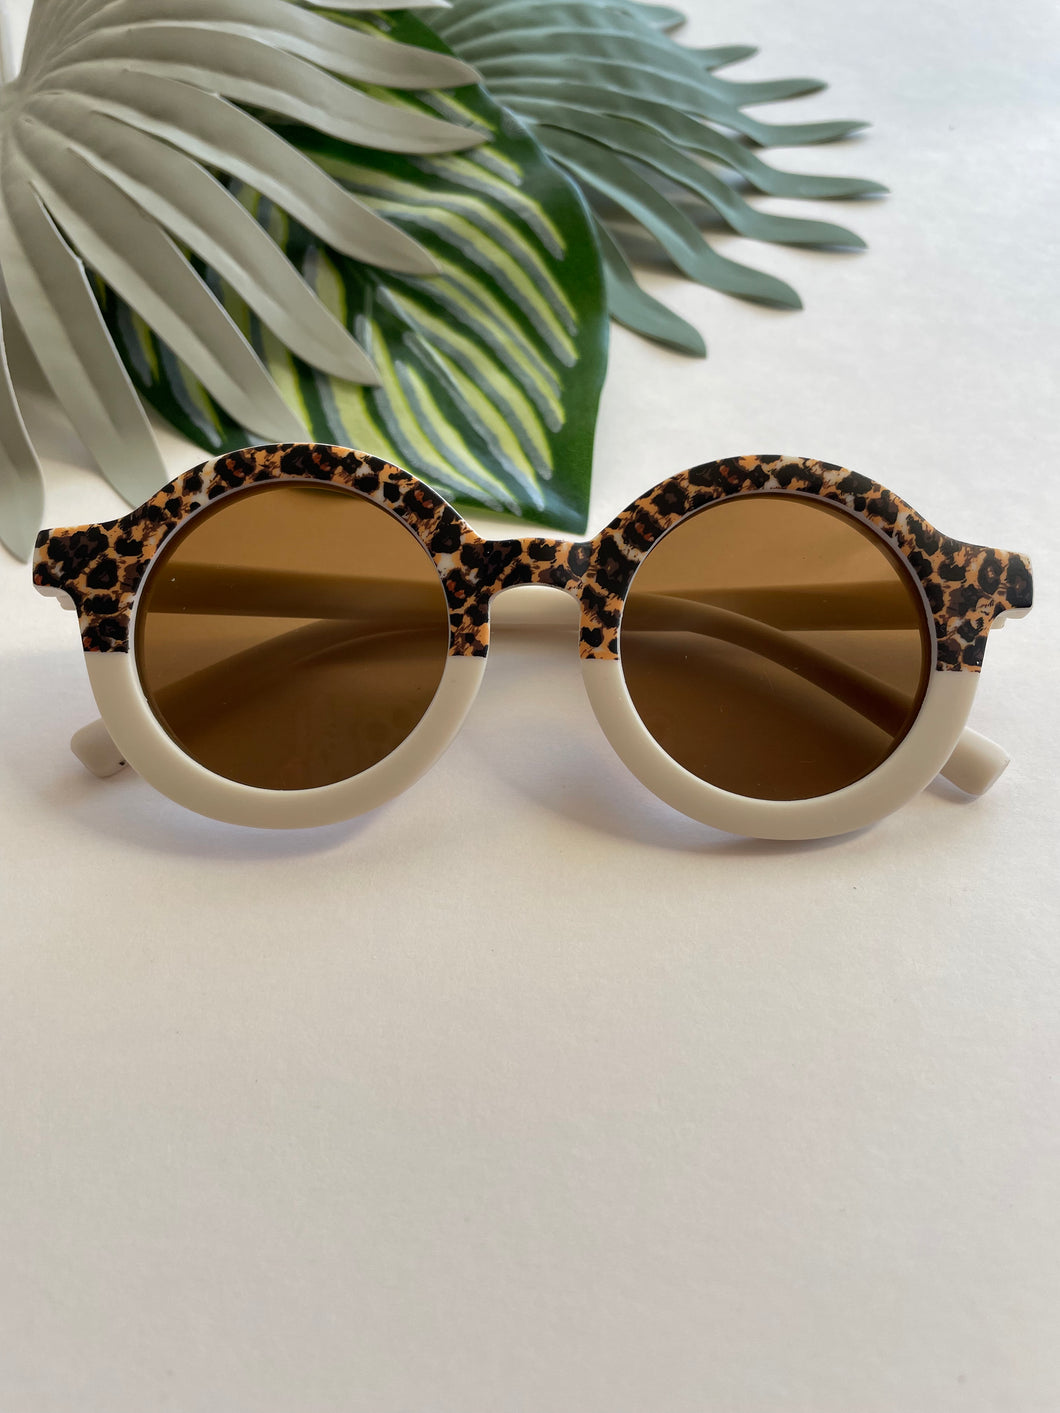 Round Two Tone Sunglasses - Sand Dollar Cheetah